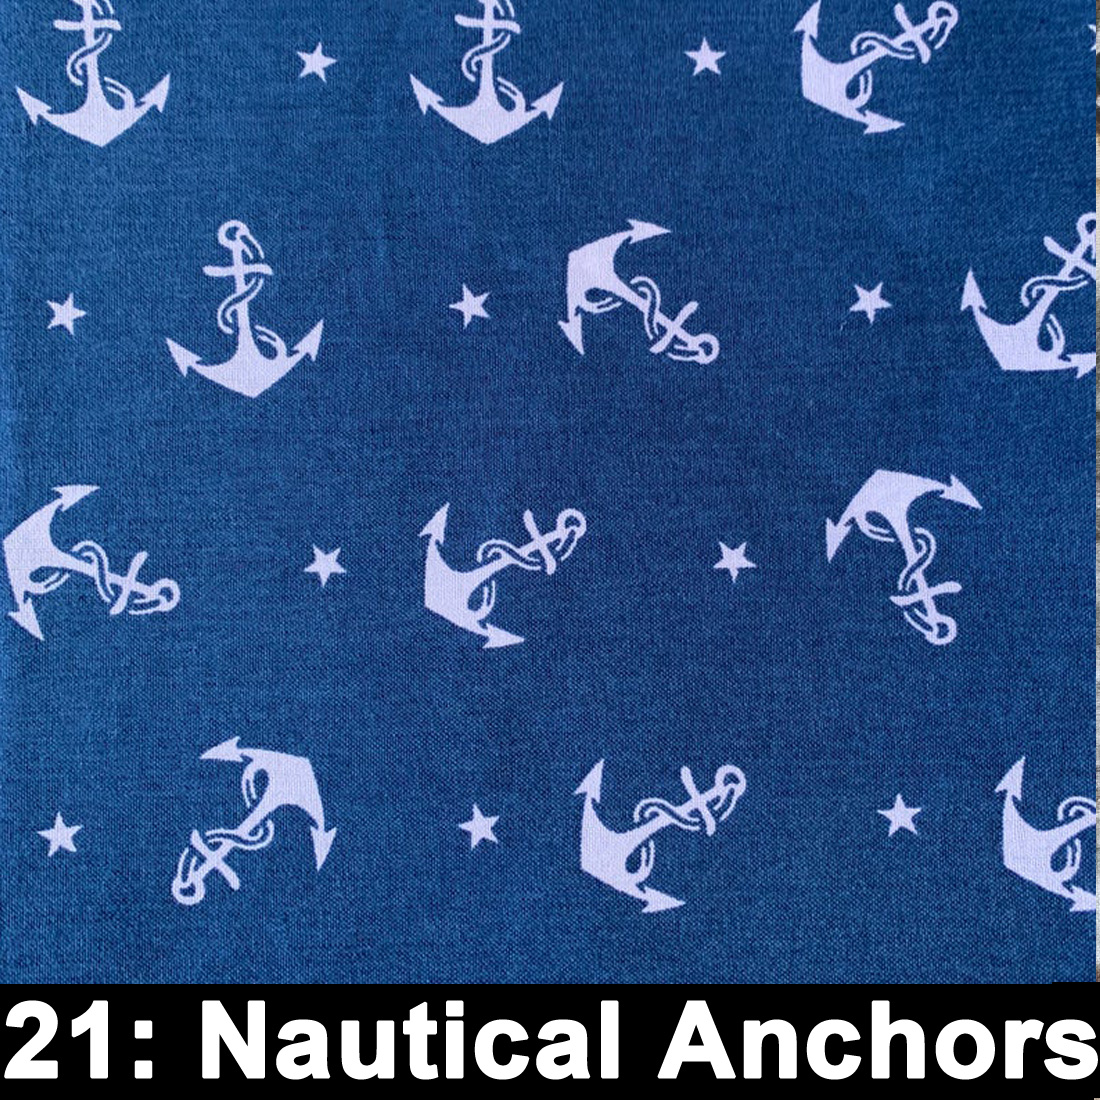 Nautical Anchors